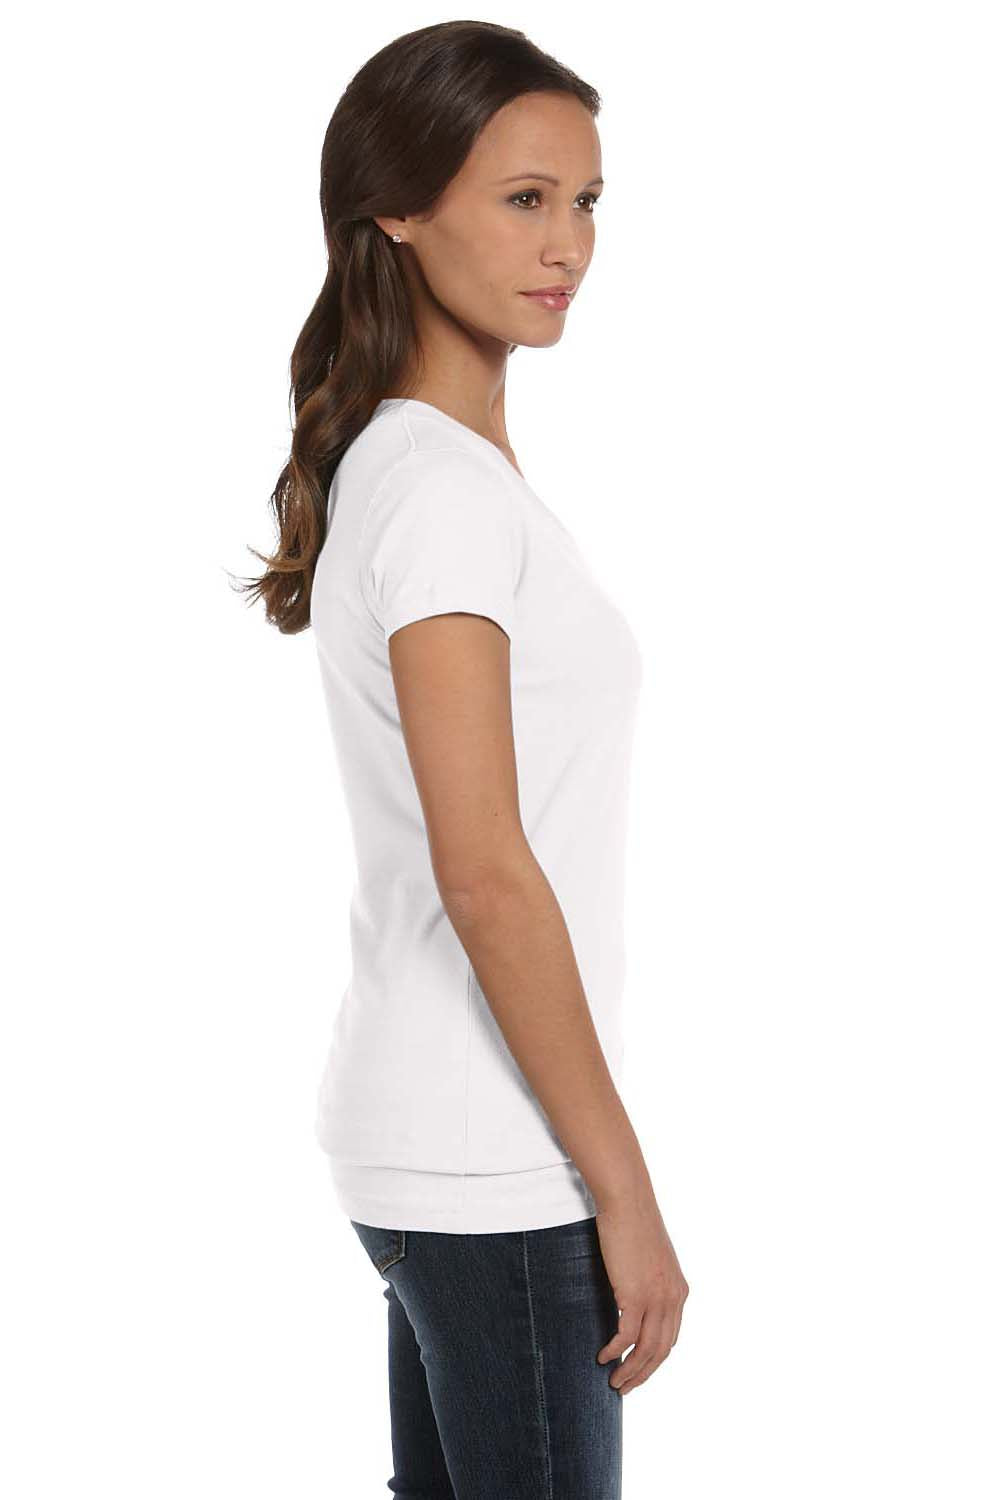 Bella + Canvas B6005/6005 Womens Jersey Short Sleeve V-Neck T-Shirt White Model Side